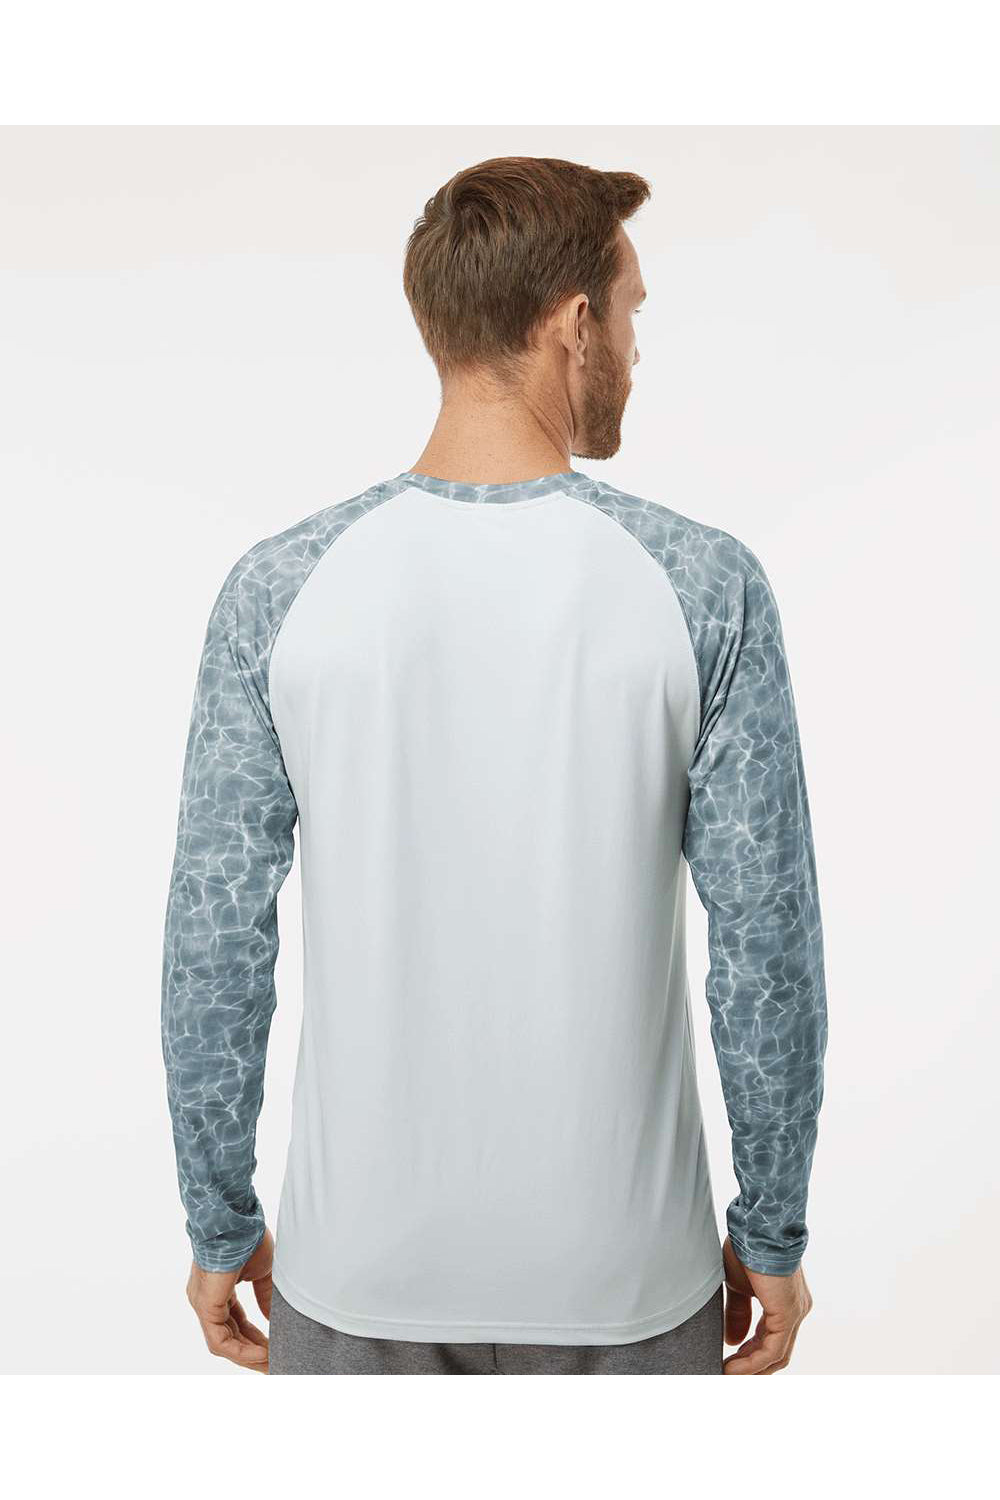 Paragon 231 Mens Panama Colorblocked Long Sleeve Crewneck T-Shirt Grey Water Model Back